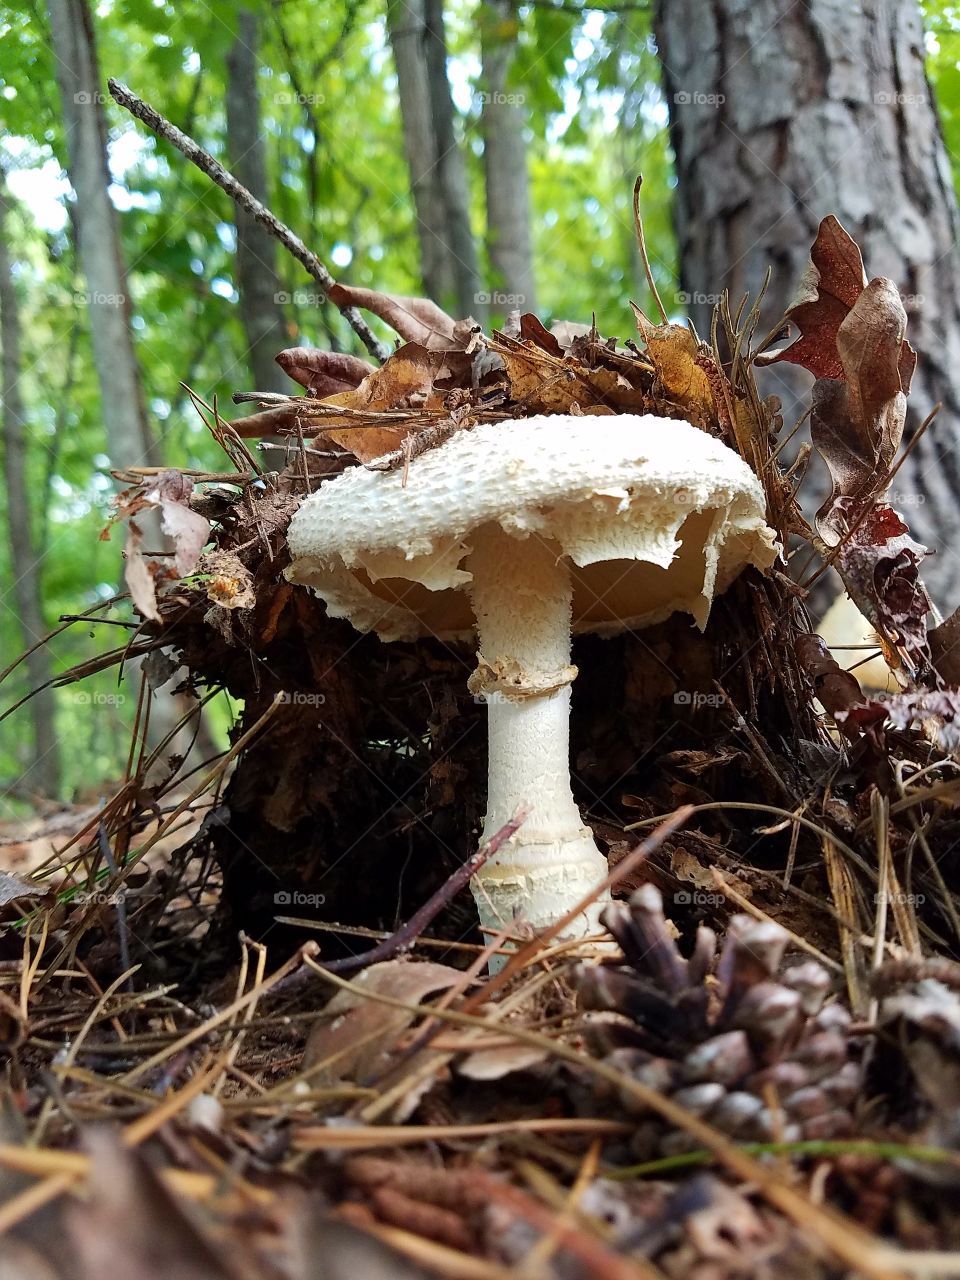 mushroom breaking through the leaves